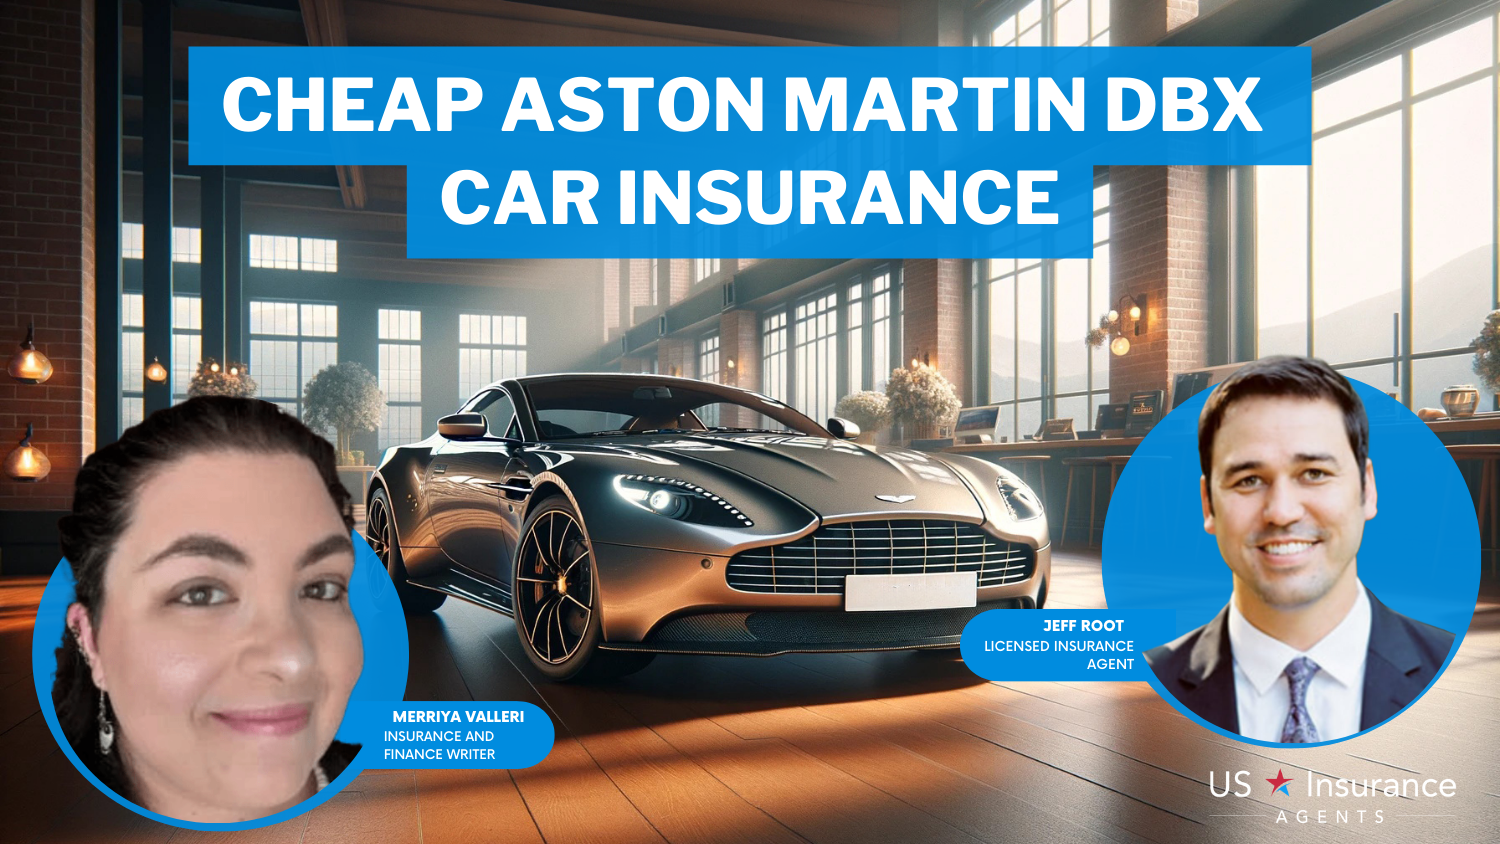 Cheap Aston Martin DBX Car Insurance: Farmers, The Hartford, and AAA